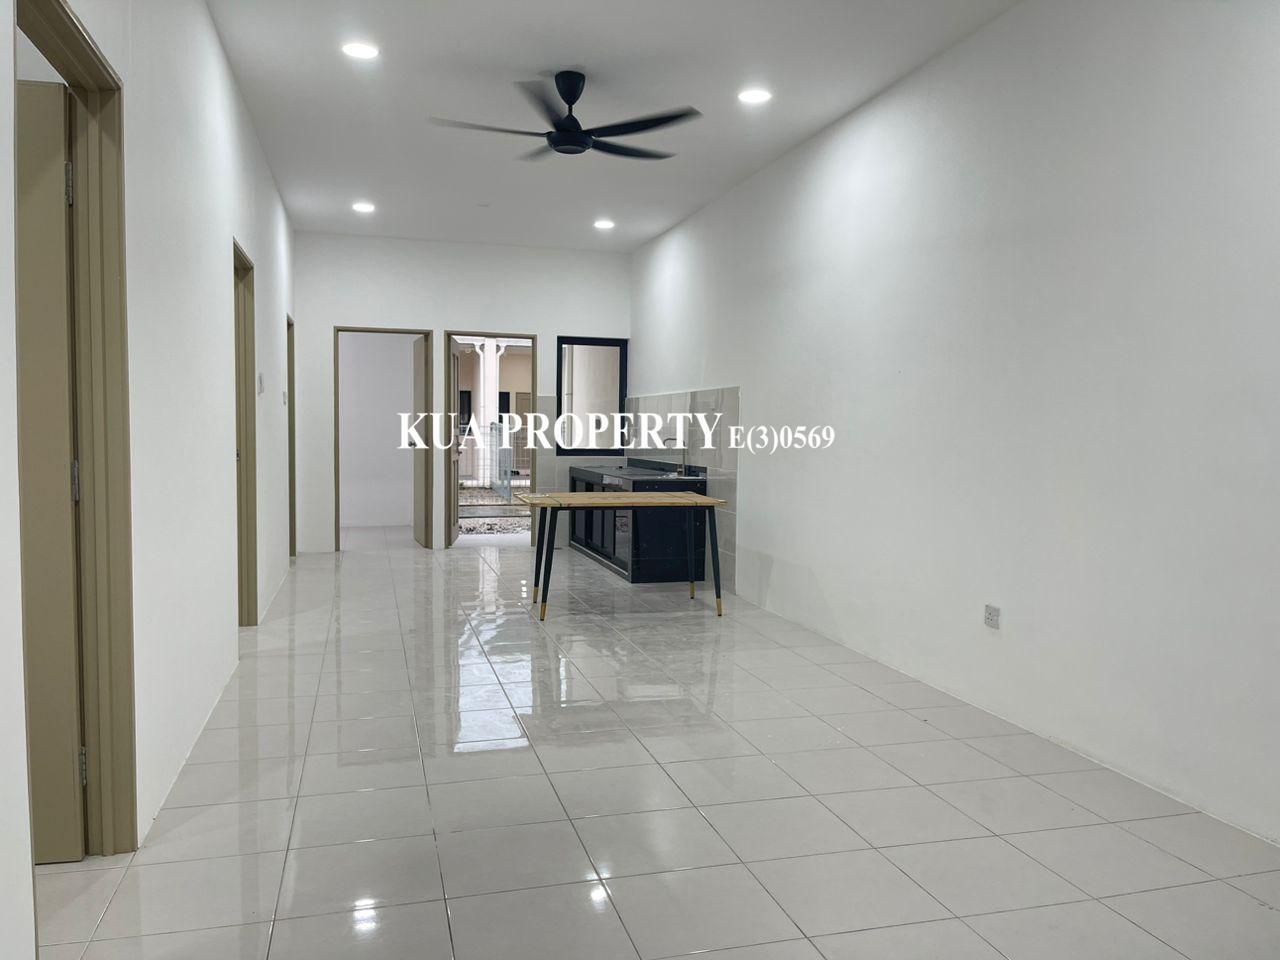 Single Storey Terrace Intermediate house For Rent Located at Bandar Baru Samariang